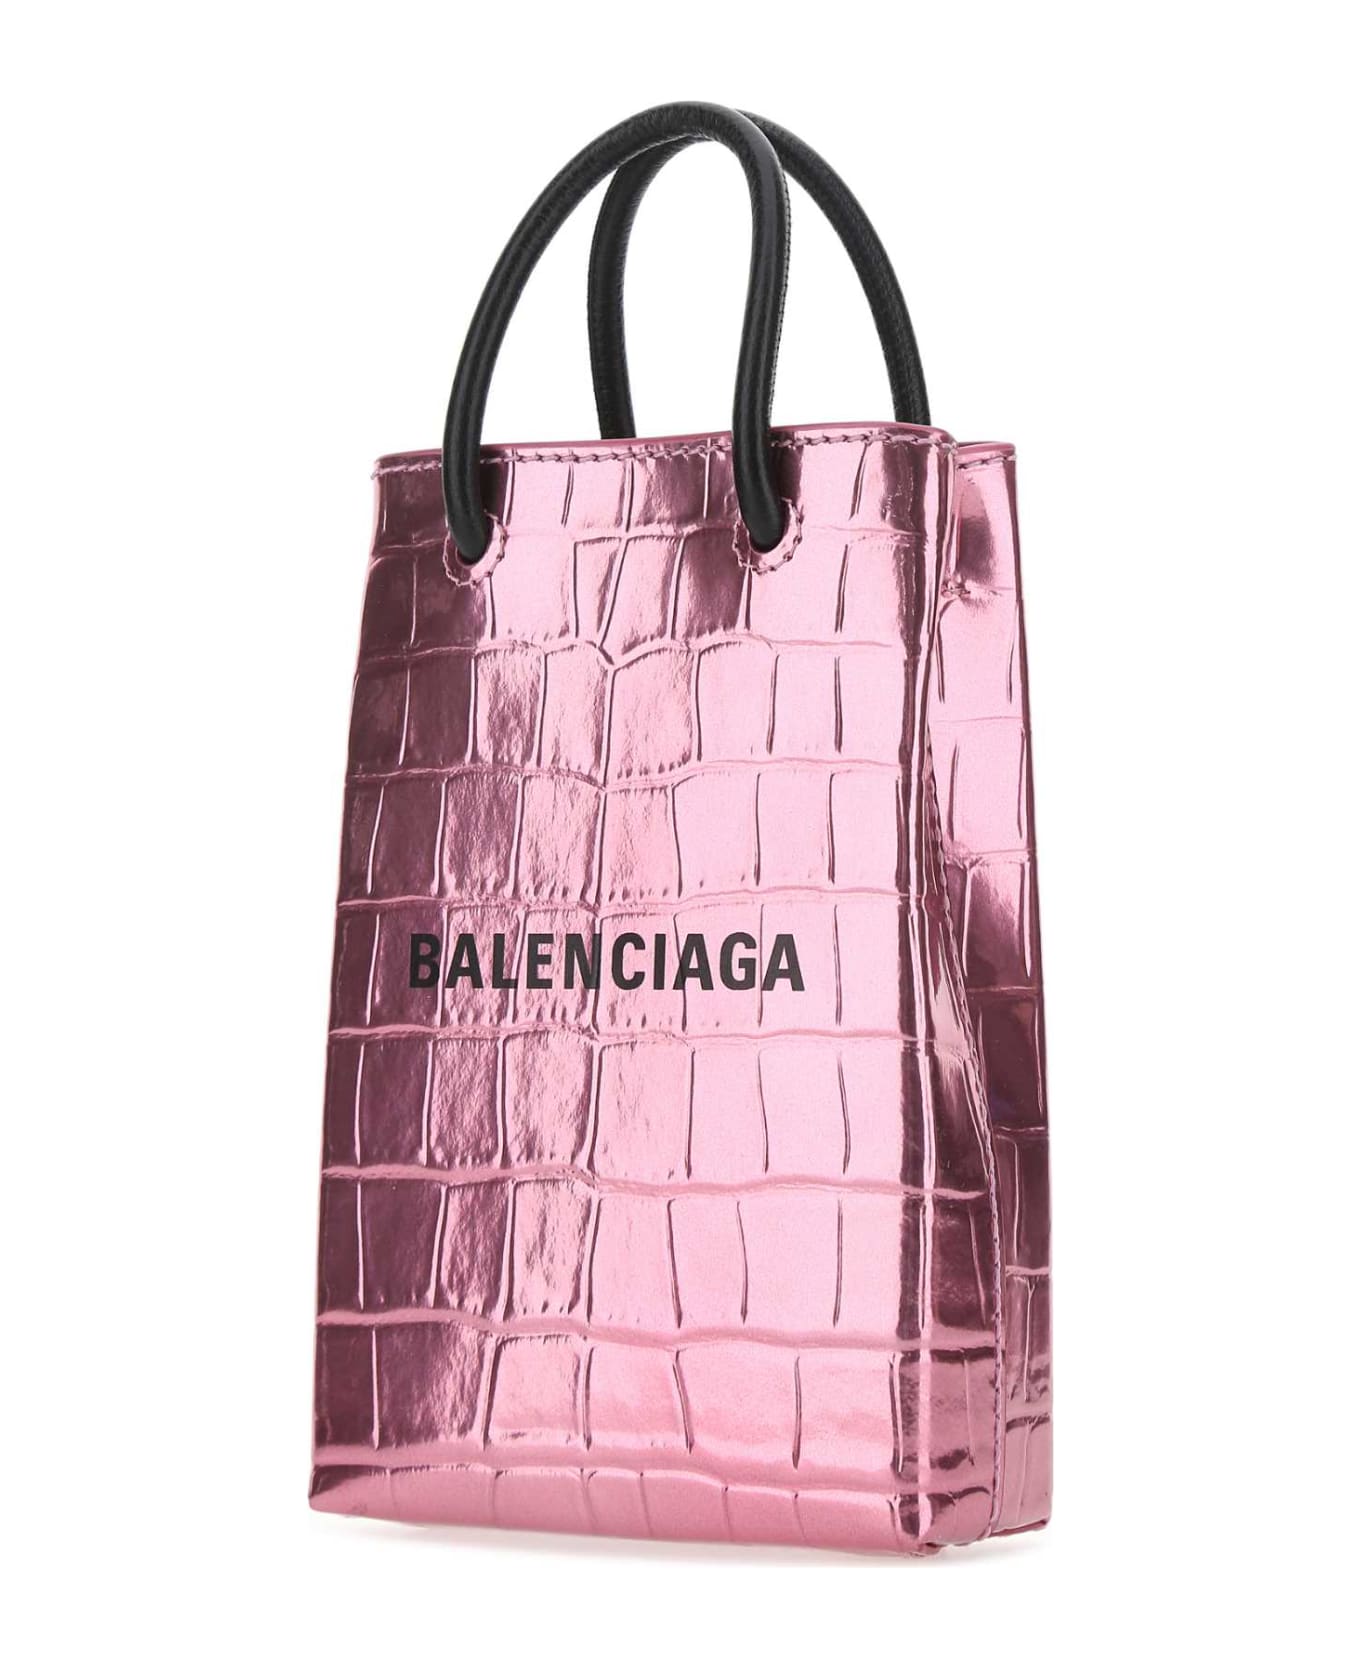 Balenciaga Pink Leather Phone Case - 6260 デジタルアクセサリー